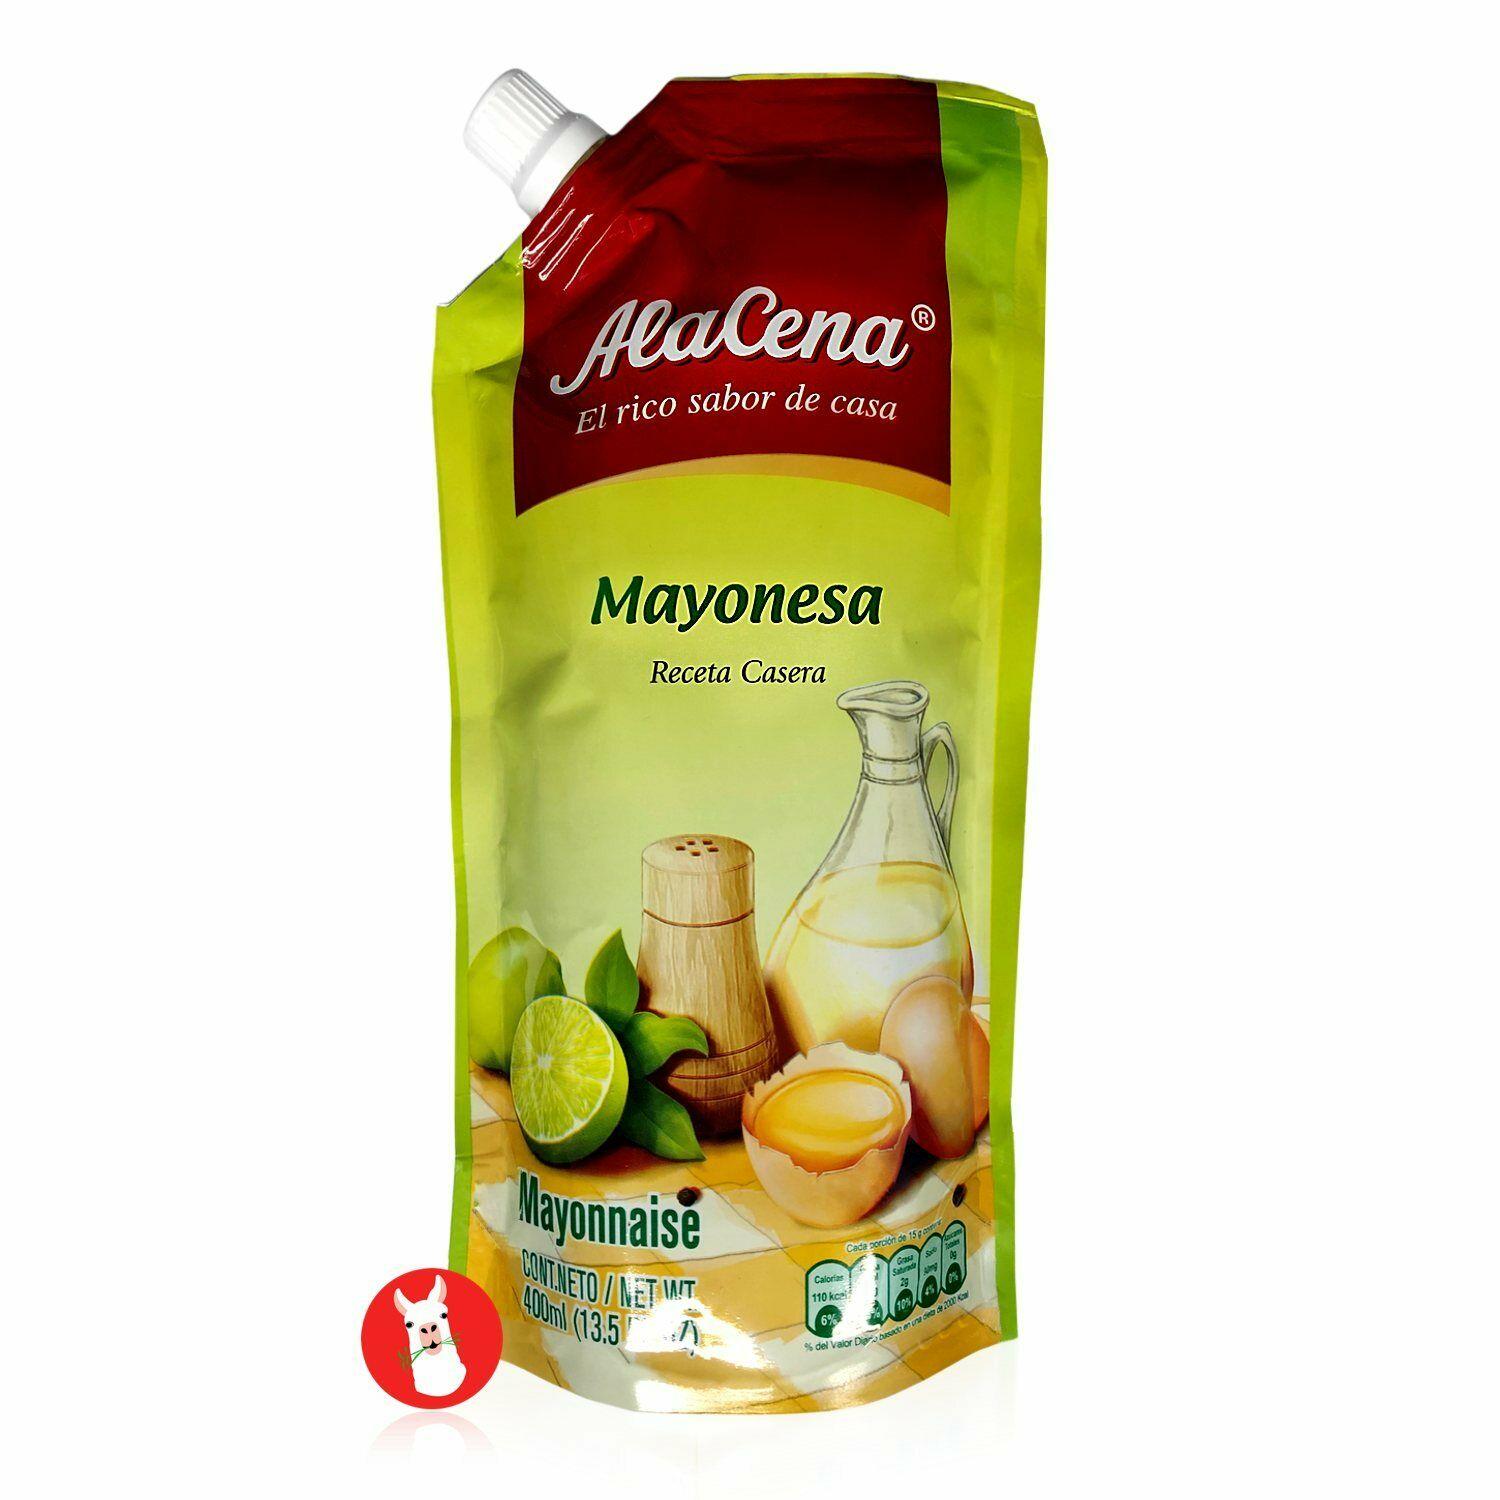 Alacena - Mayo (homemade recipe) Doy Pack 13.5 FL OZ